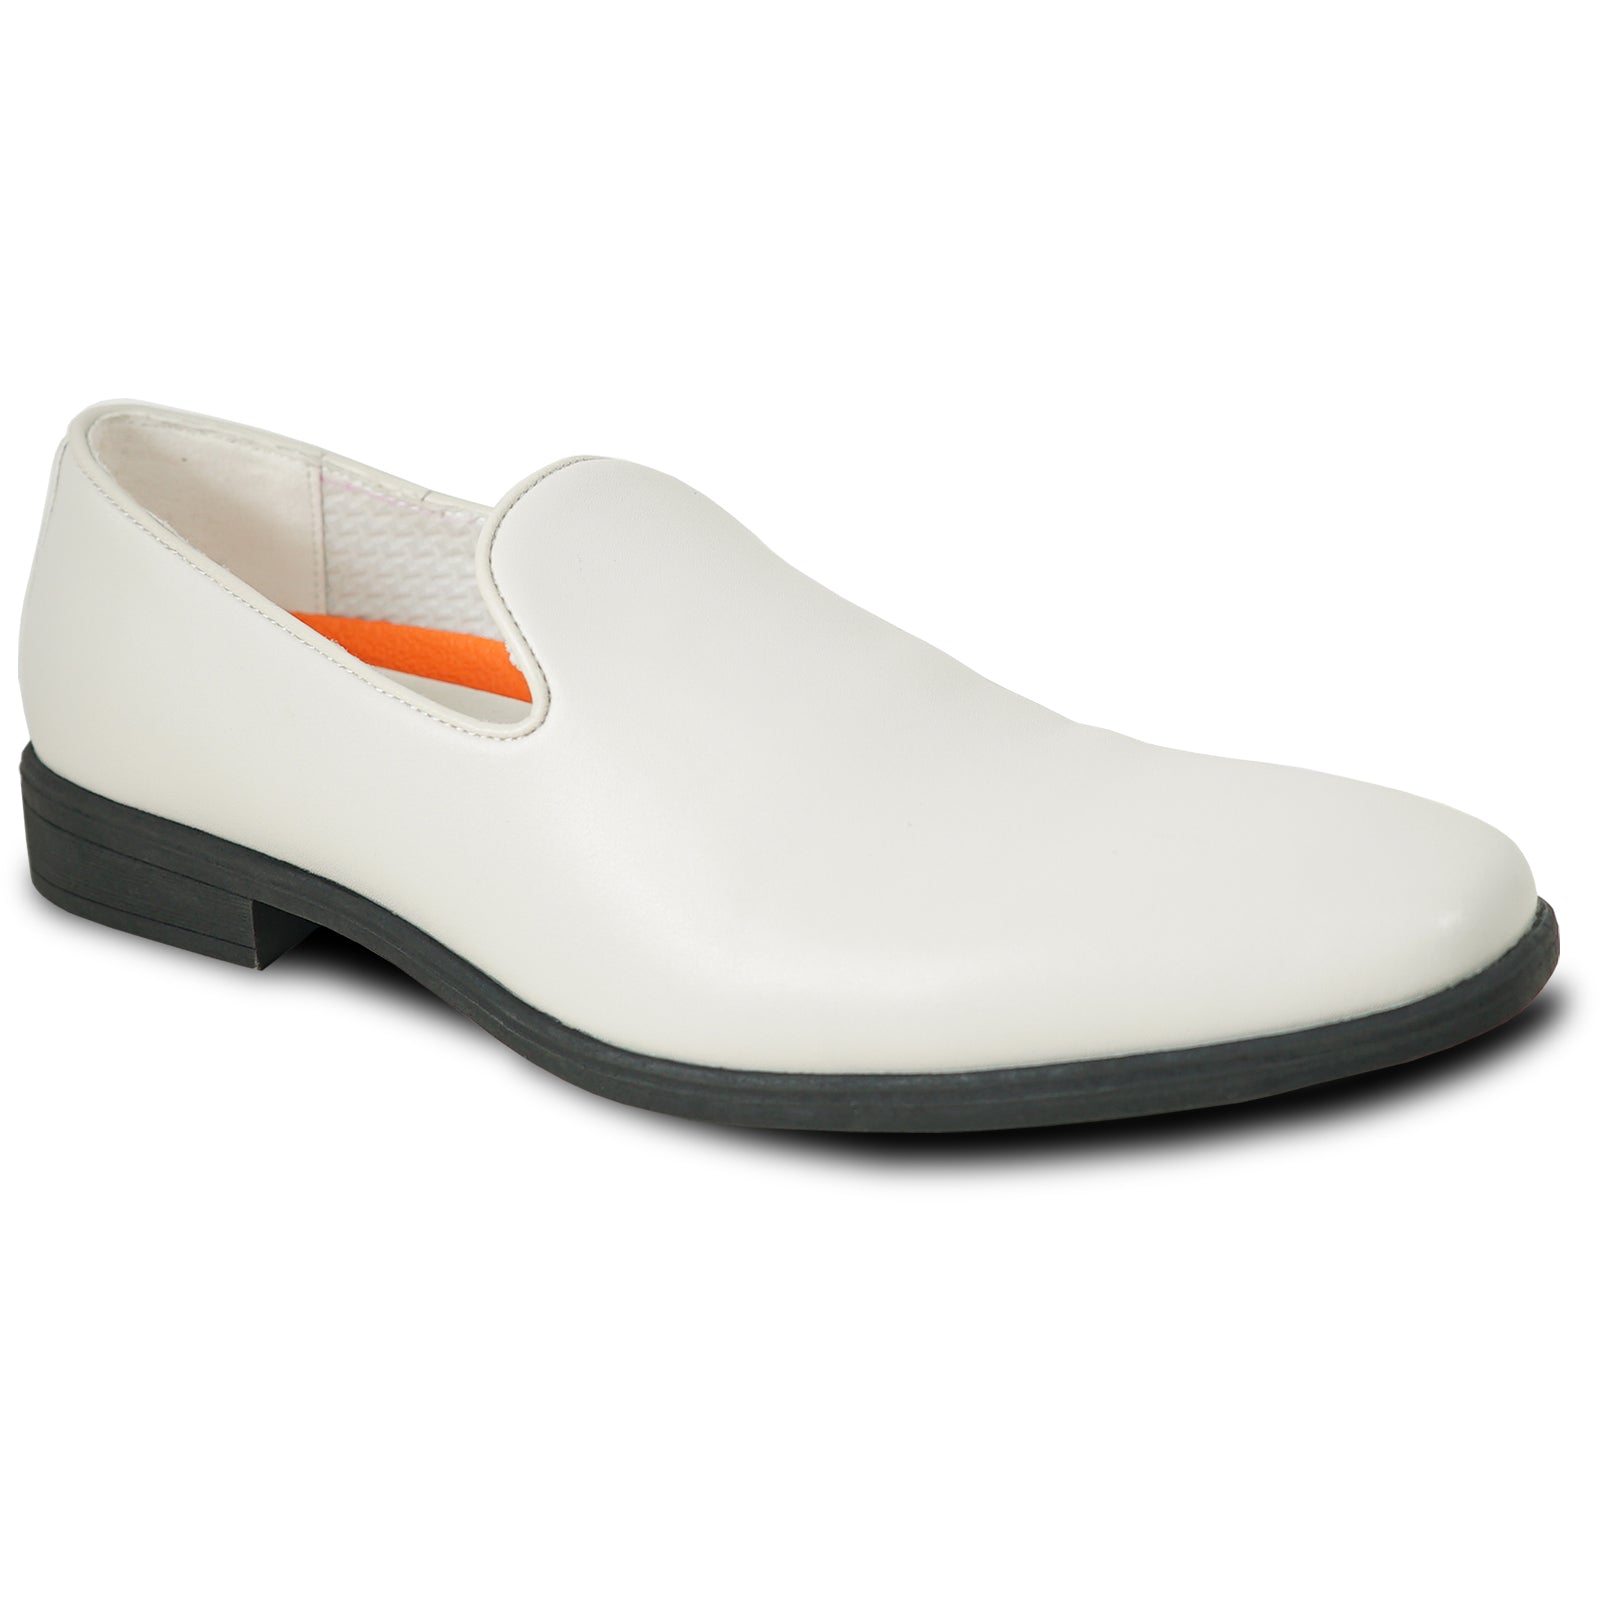 "Ivory Men's Classic Plain Toe Loafer Dress Shoe - Slip On Style"